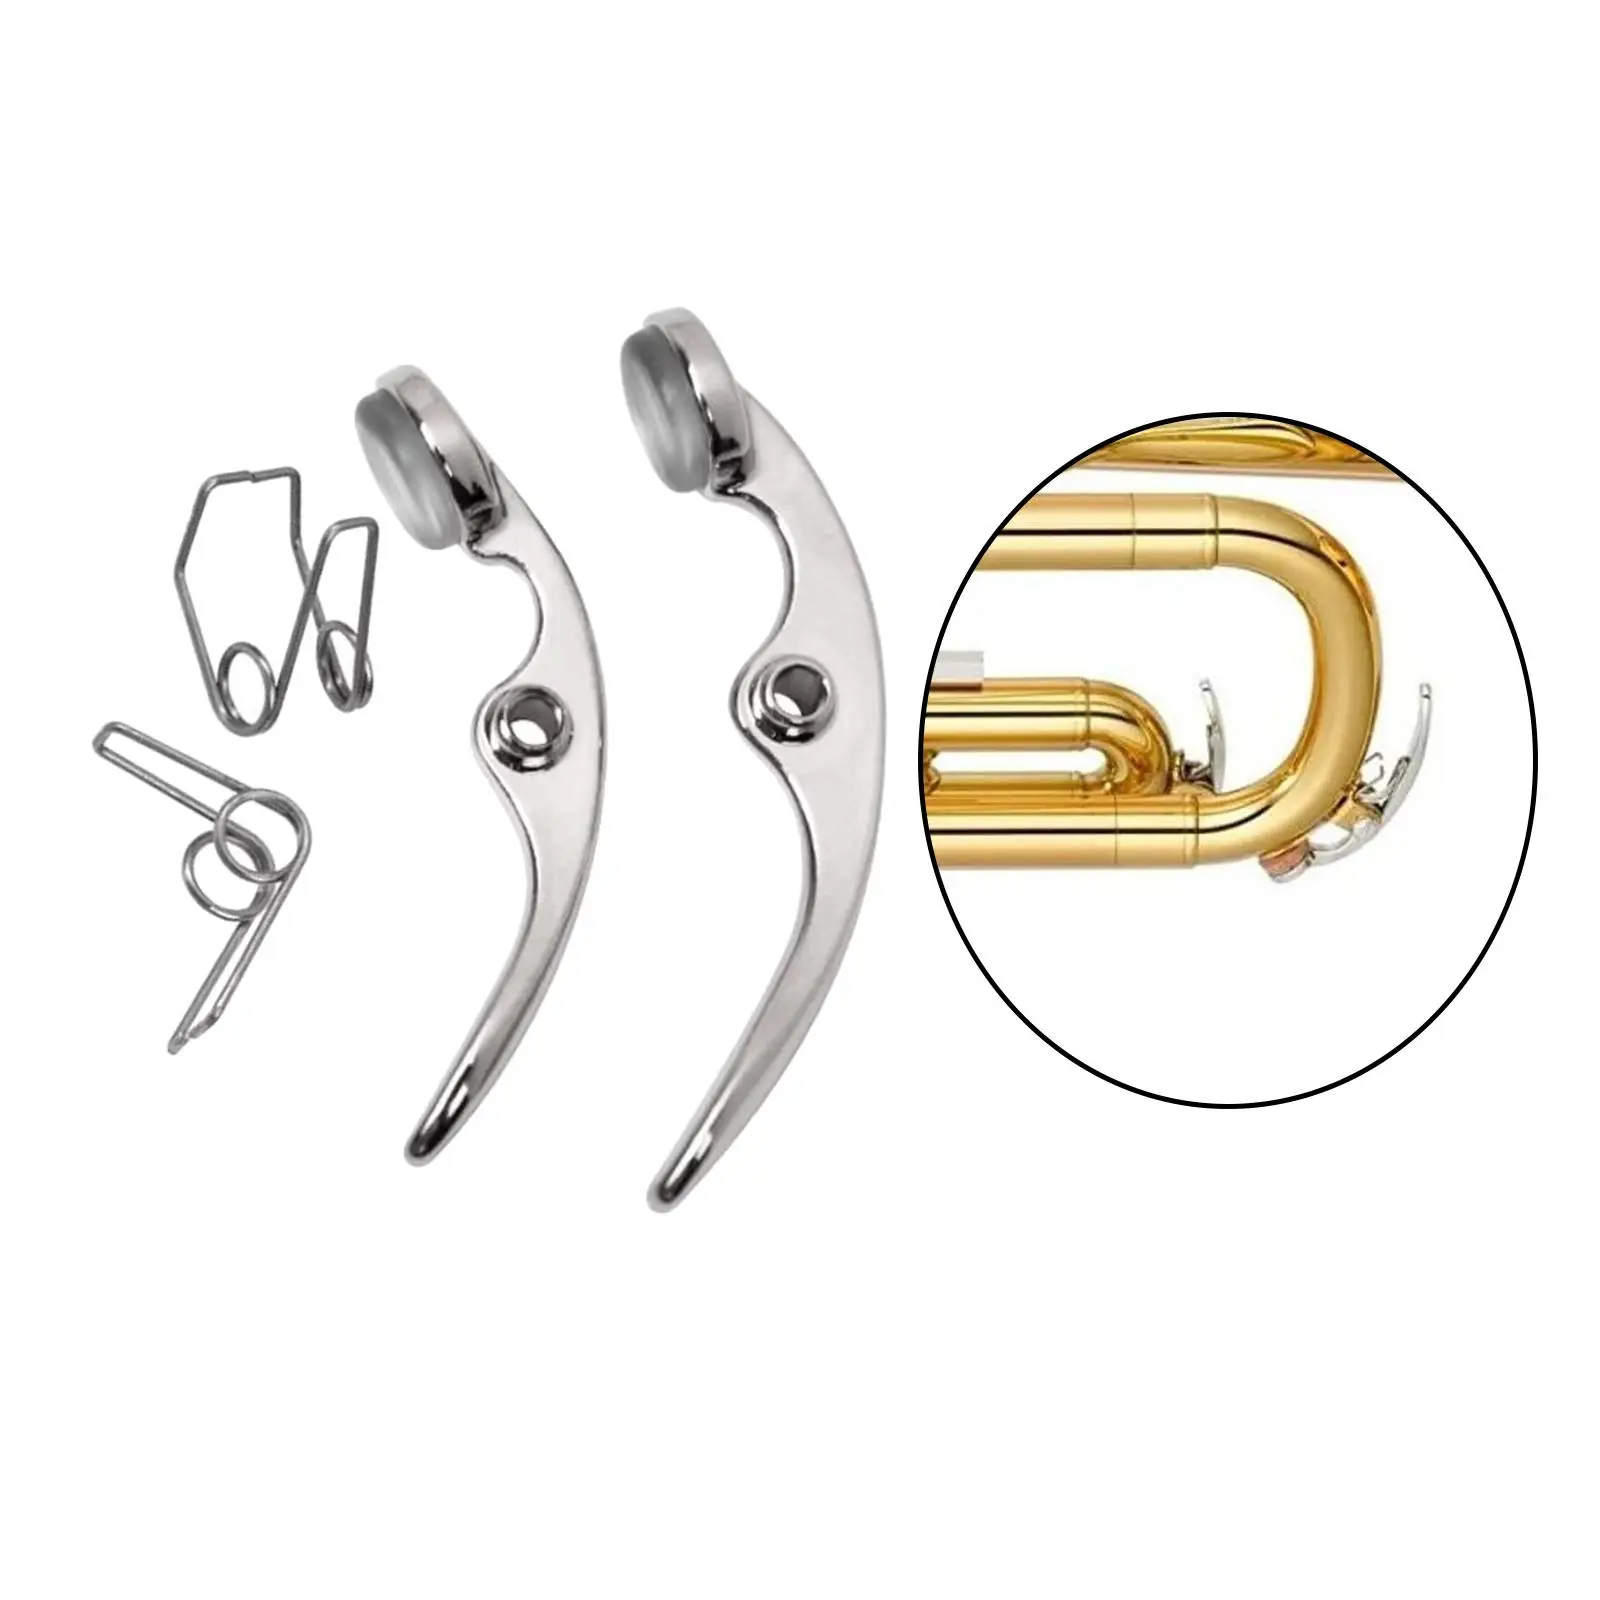 Trumpet Water Key Trumpet Maintenance Repairing Repair Kits for Repairing Wind Instrument Trombone Trumpet Brass Instrument